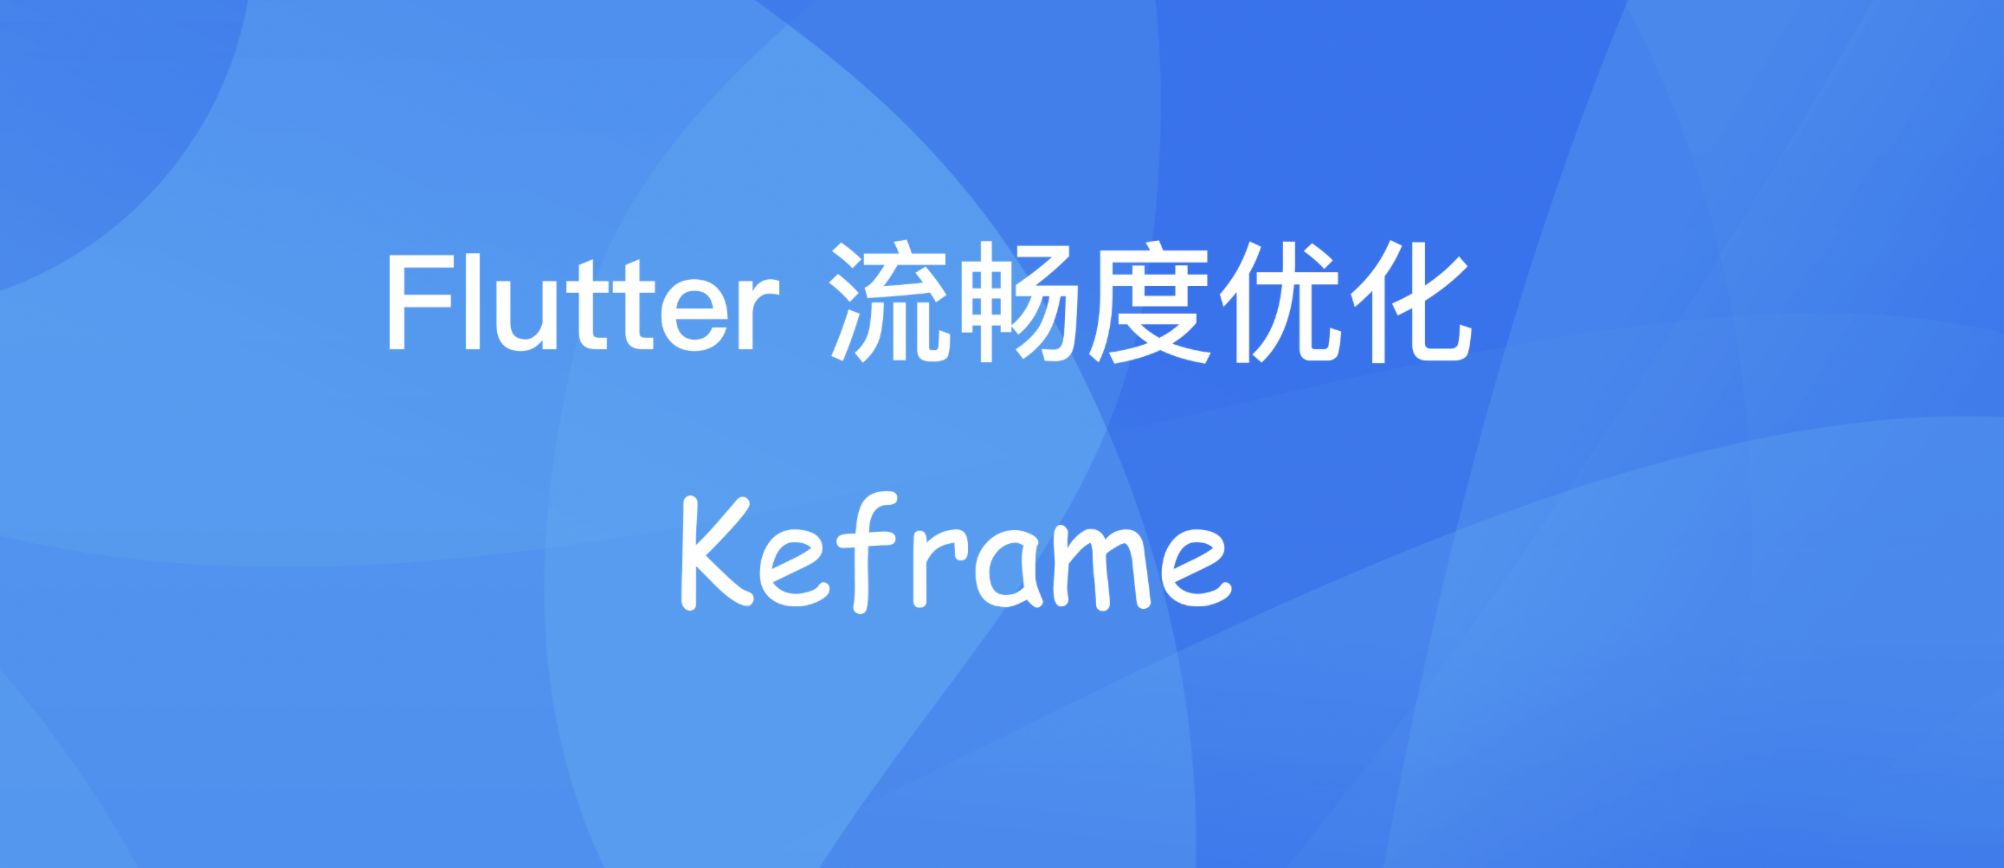 Flutter流畅度优化神器-开源组件keframe详解